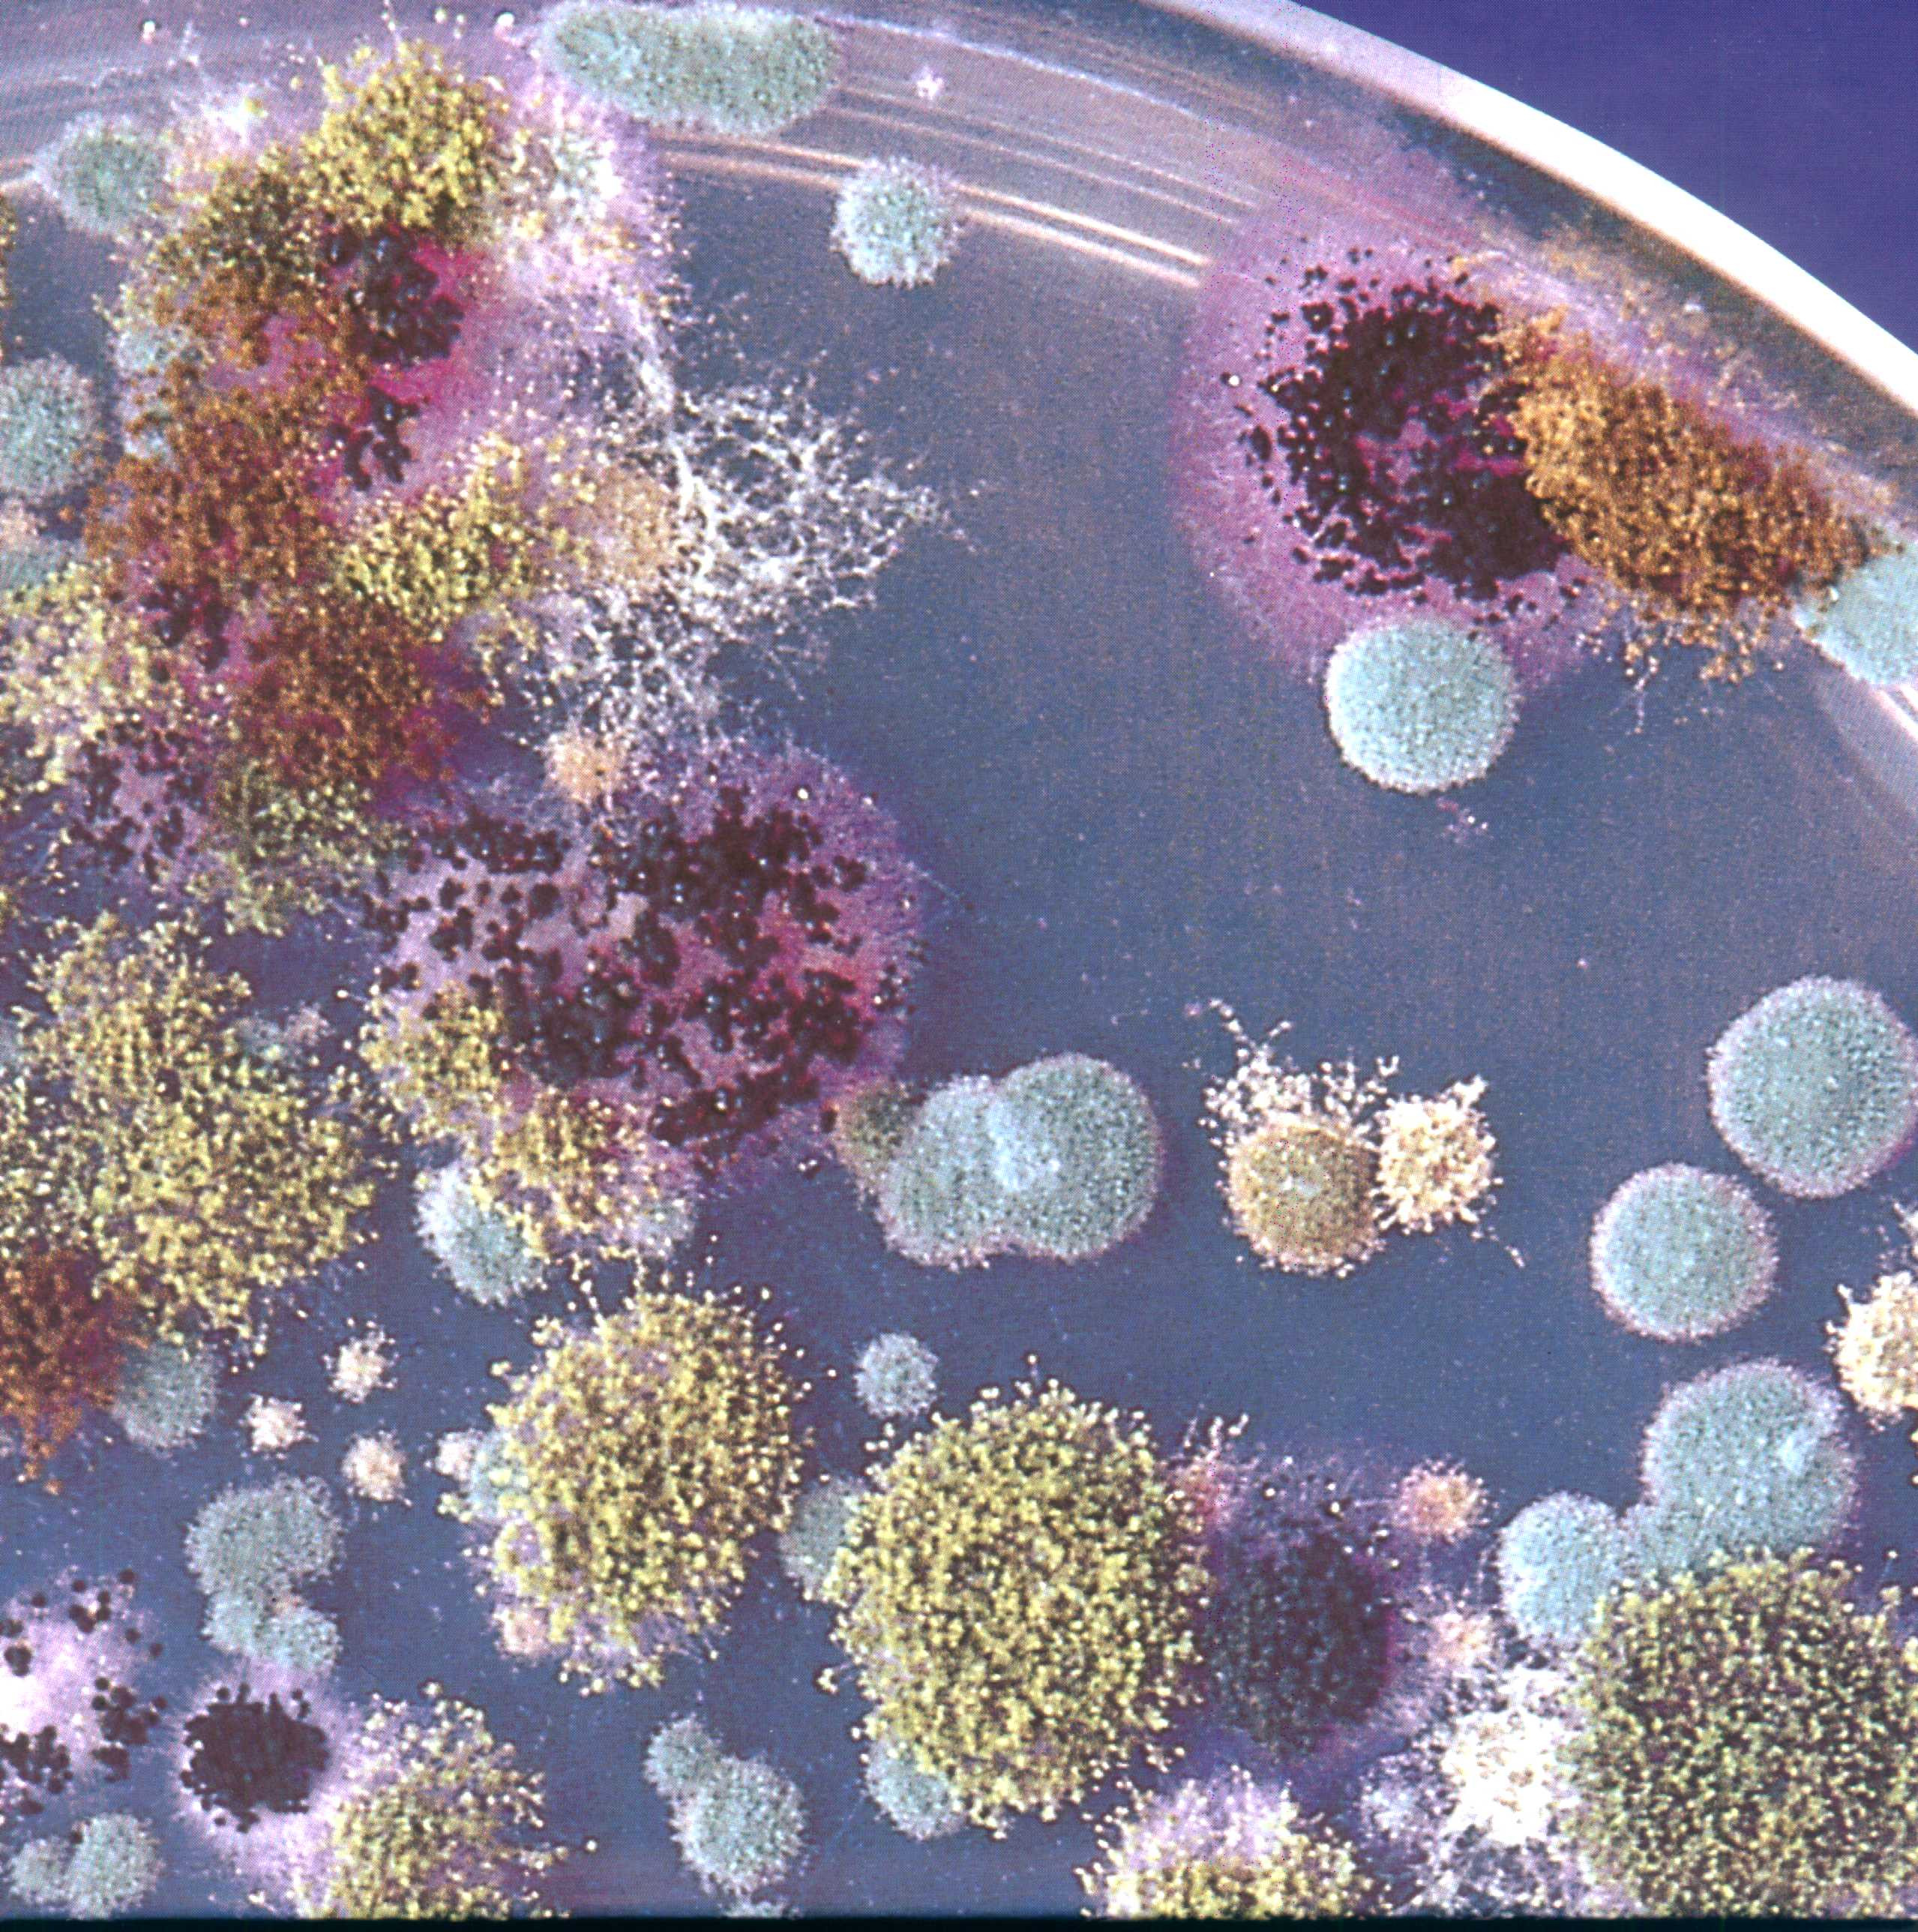 Плесень аллерген. Плесени микробиология. Плесневые грибы бактерии. Аллергены плесневых грибов.